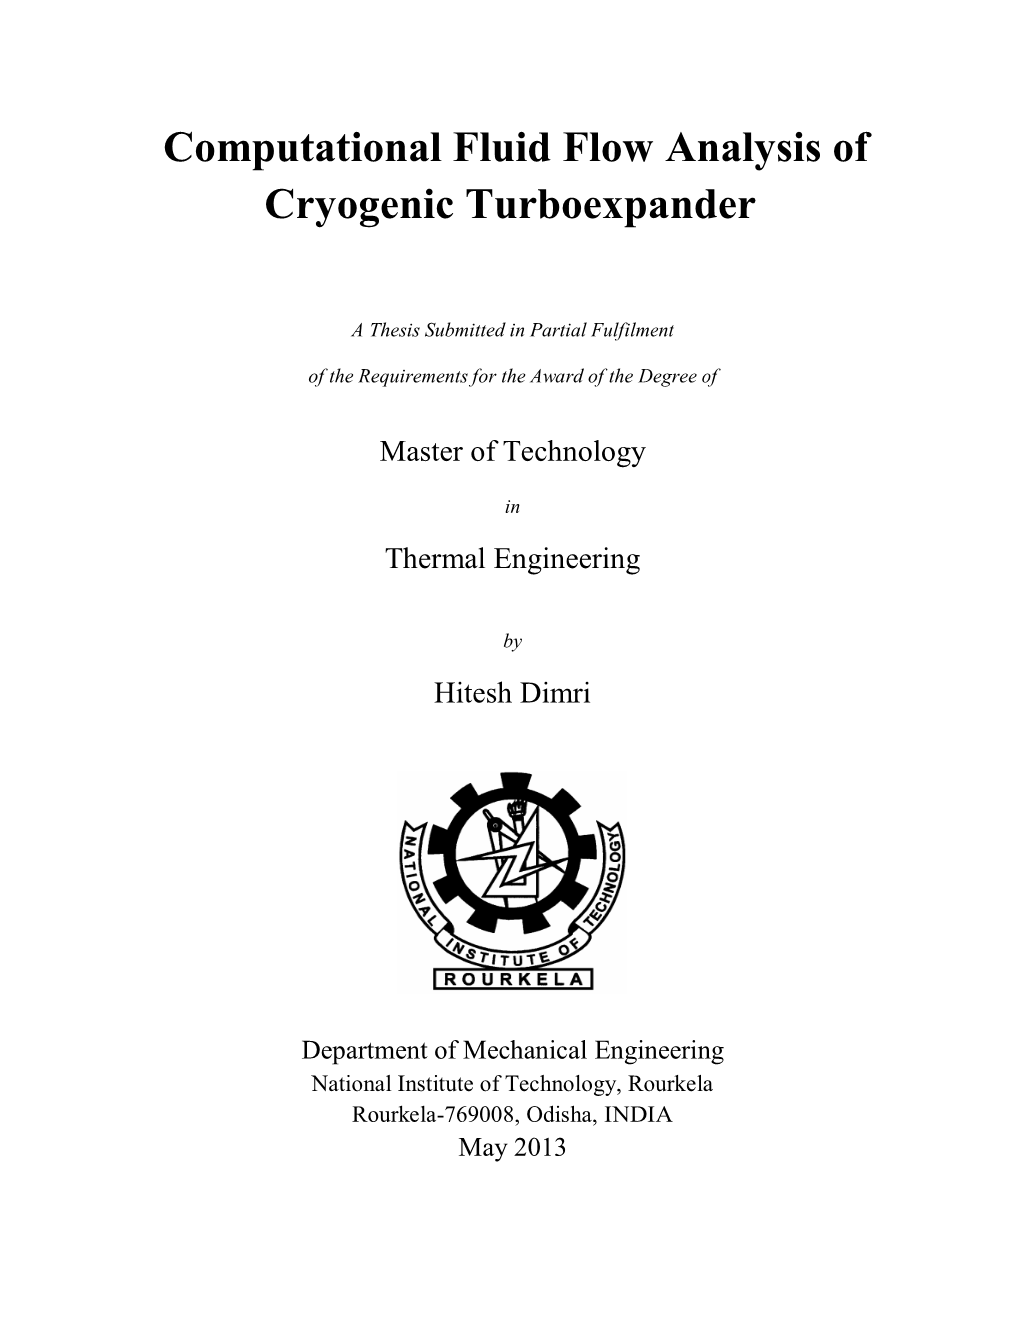 Computational Fluid Flow Analysis of Cryogenic Turboexpander